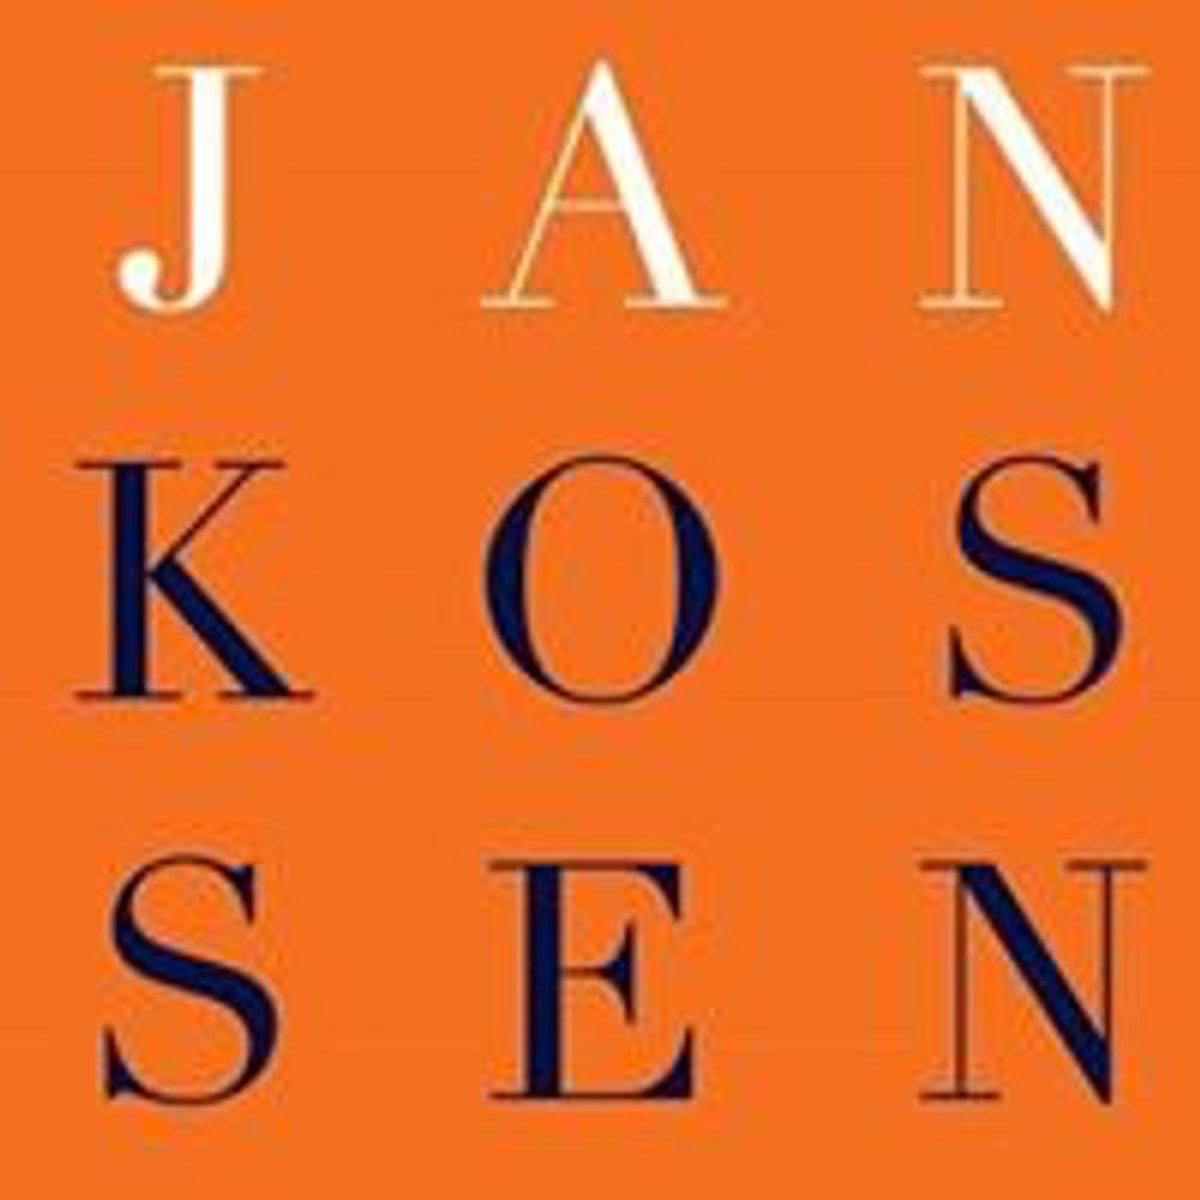 Jan Kossen - Bio and Collected Artworks - Artland